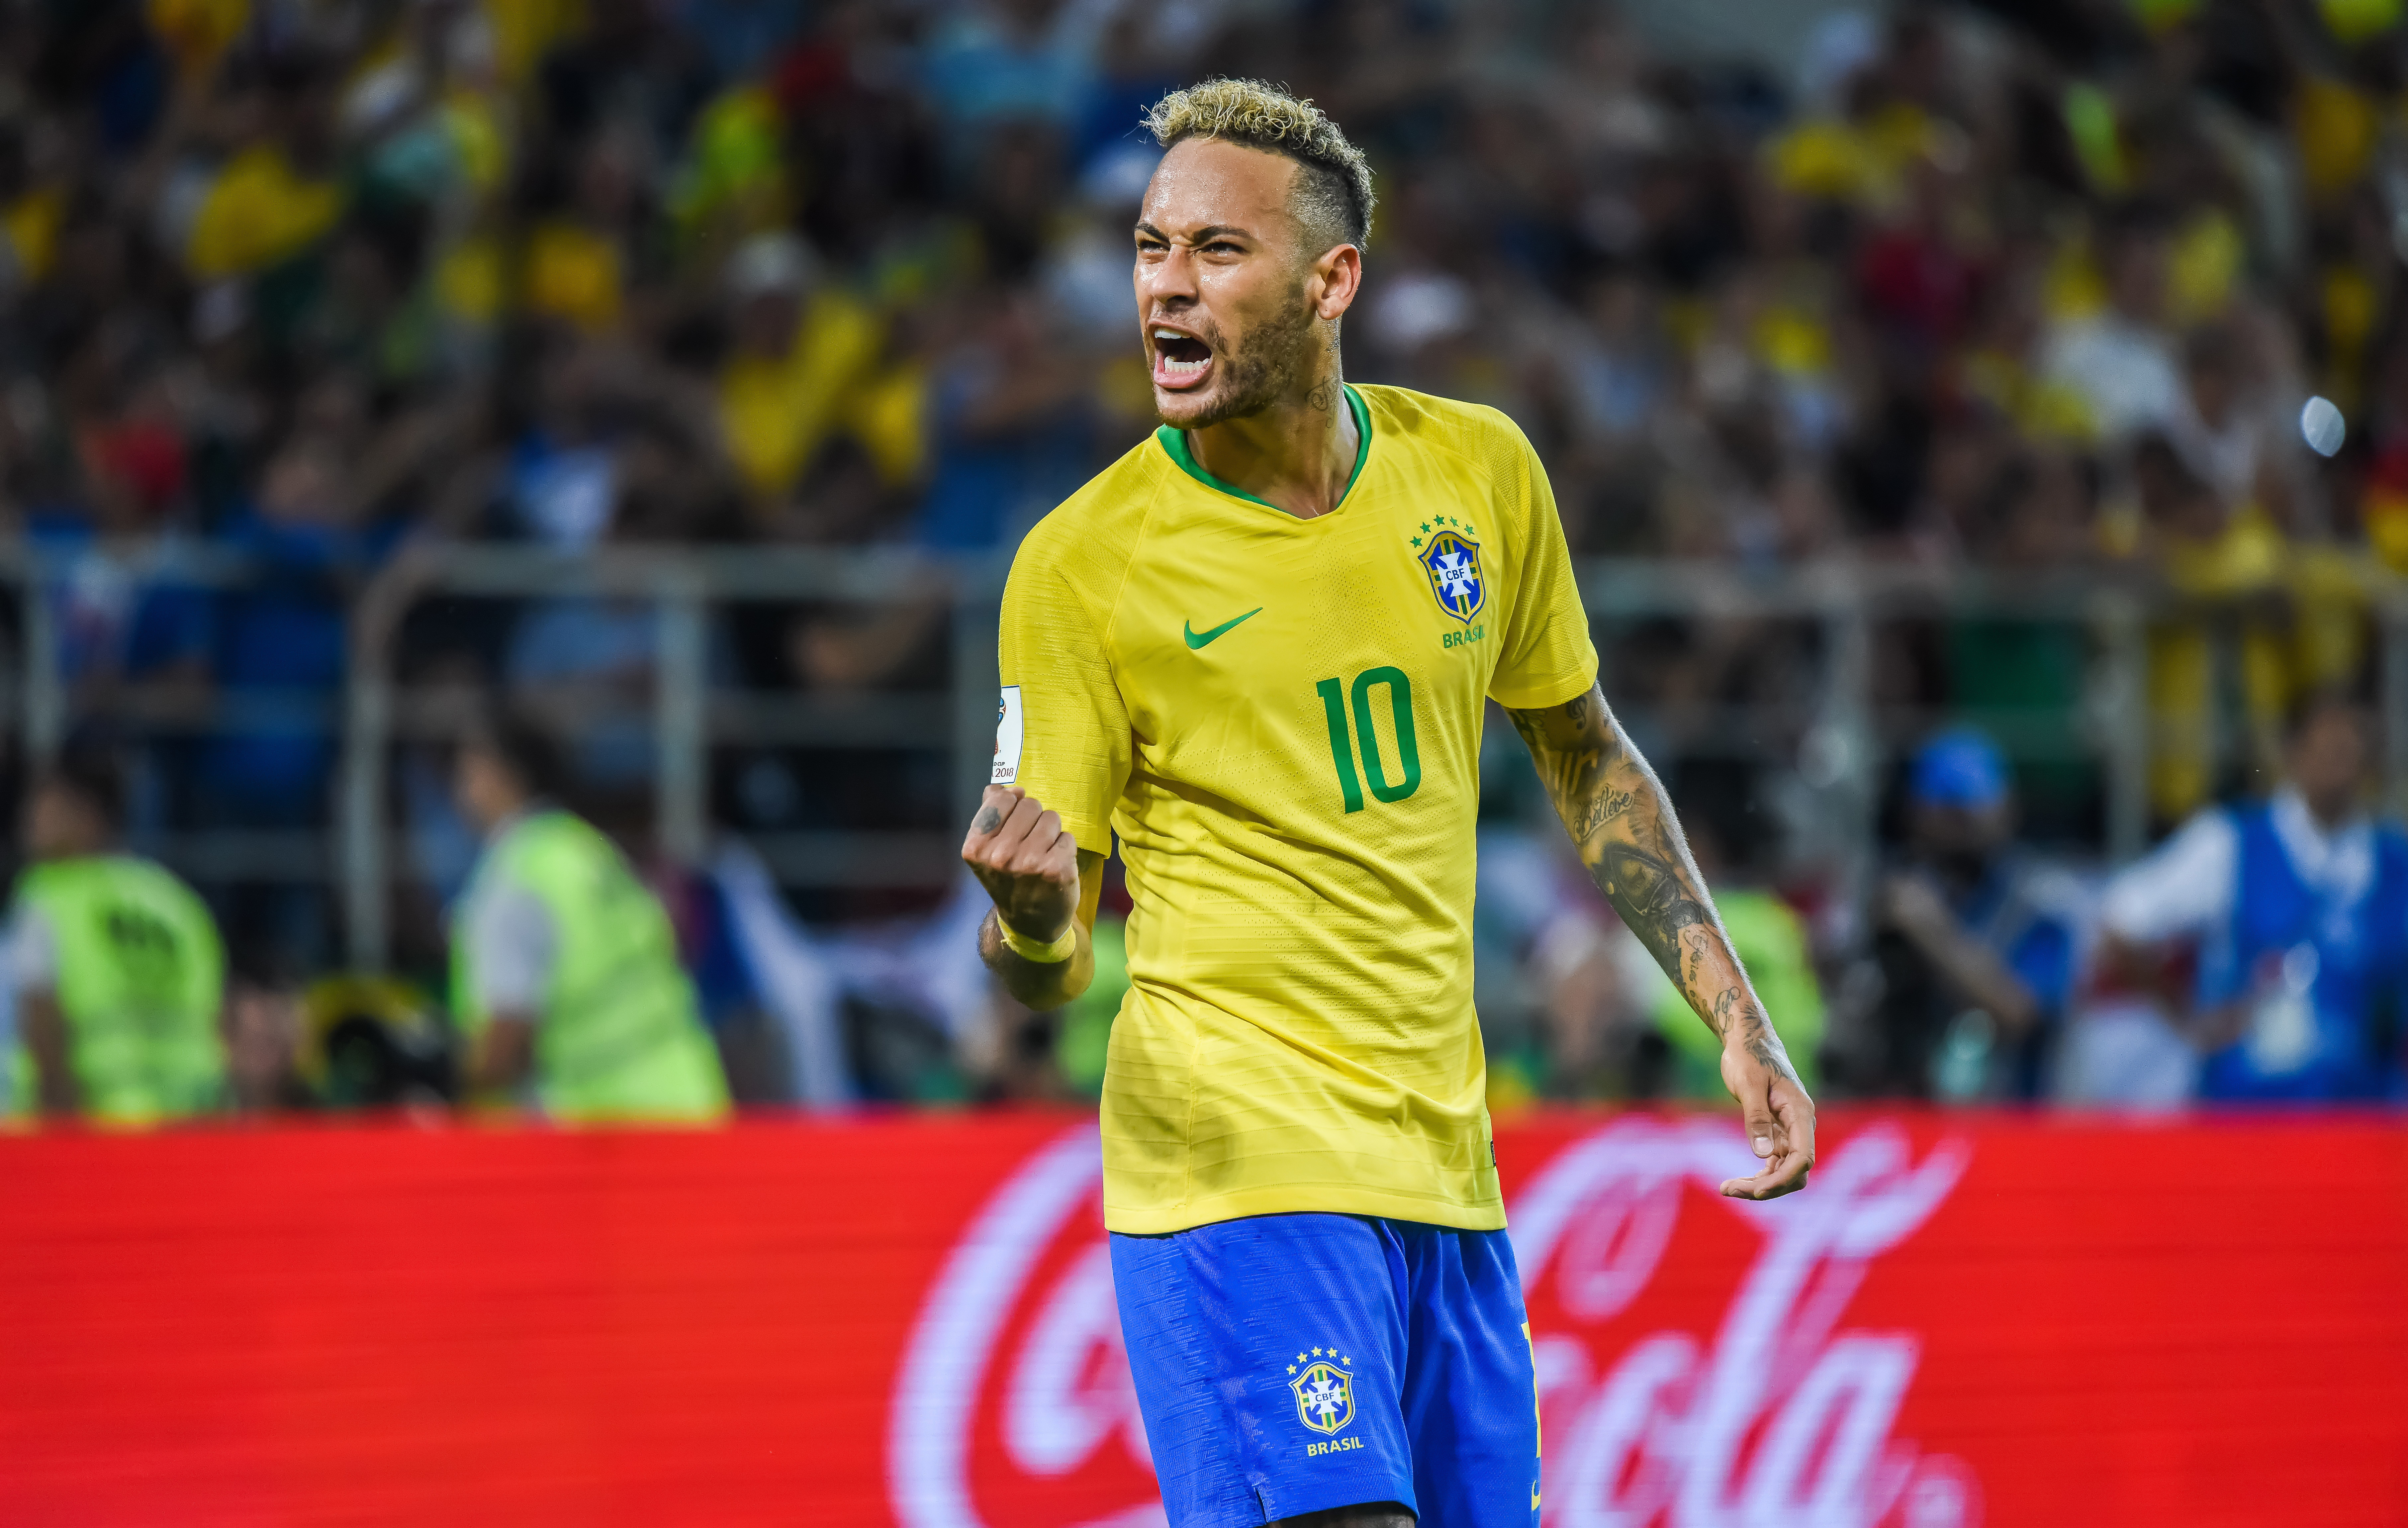 neymar cleats 2019